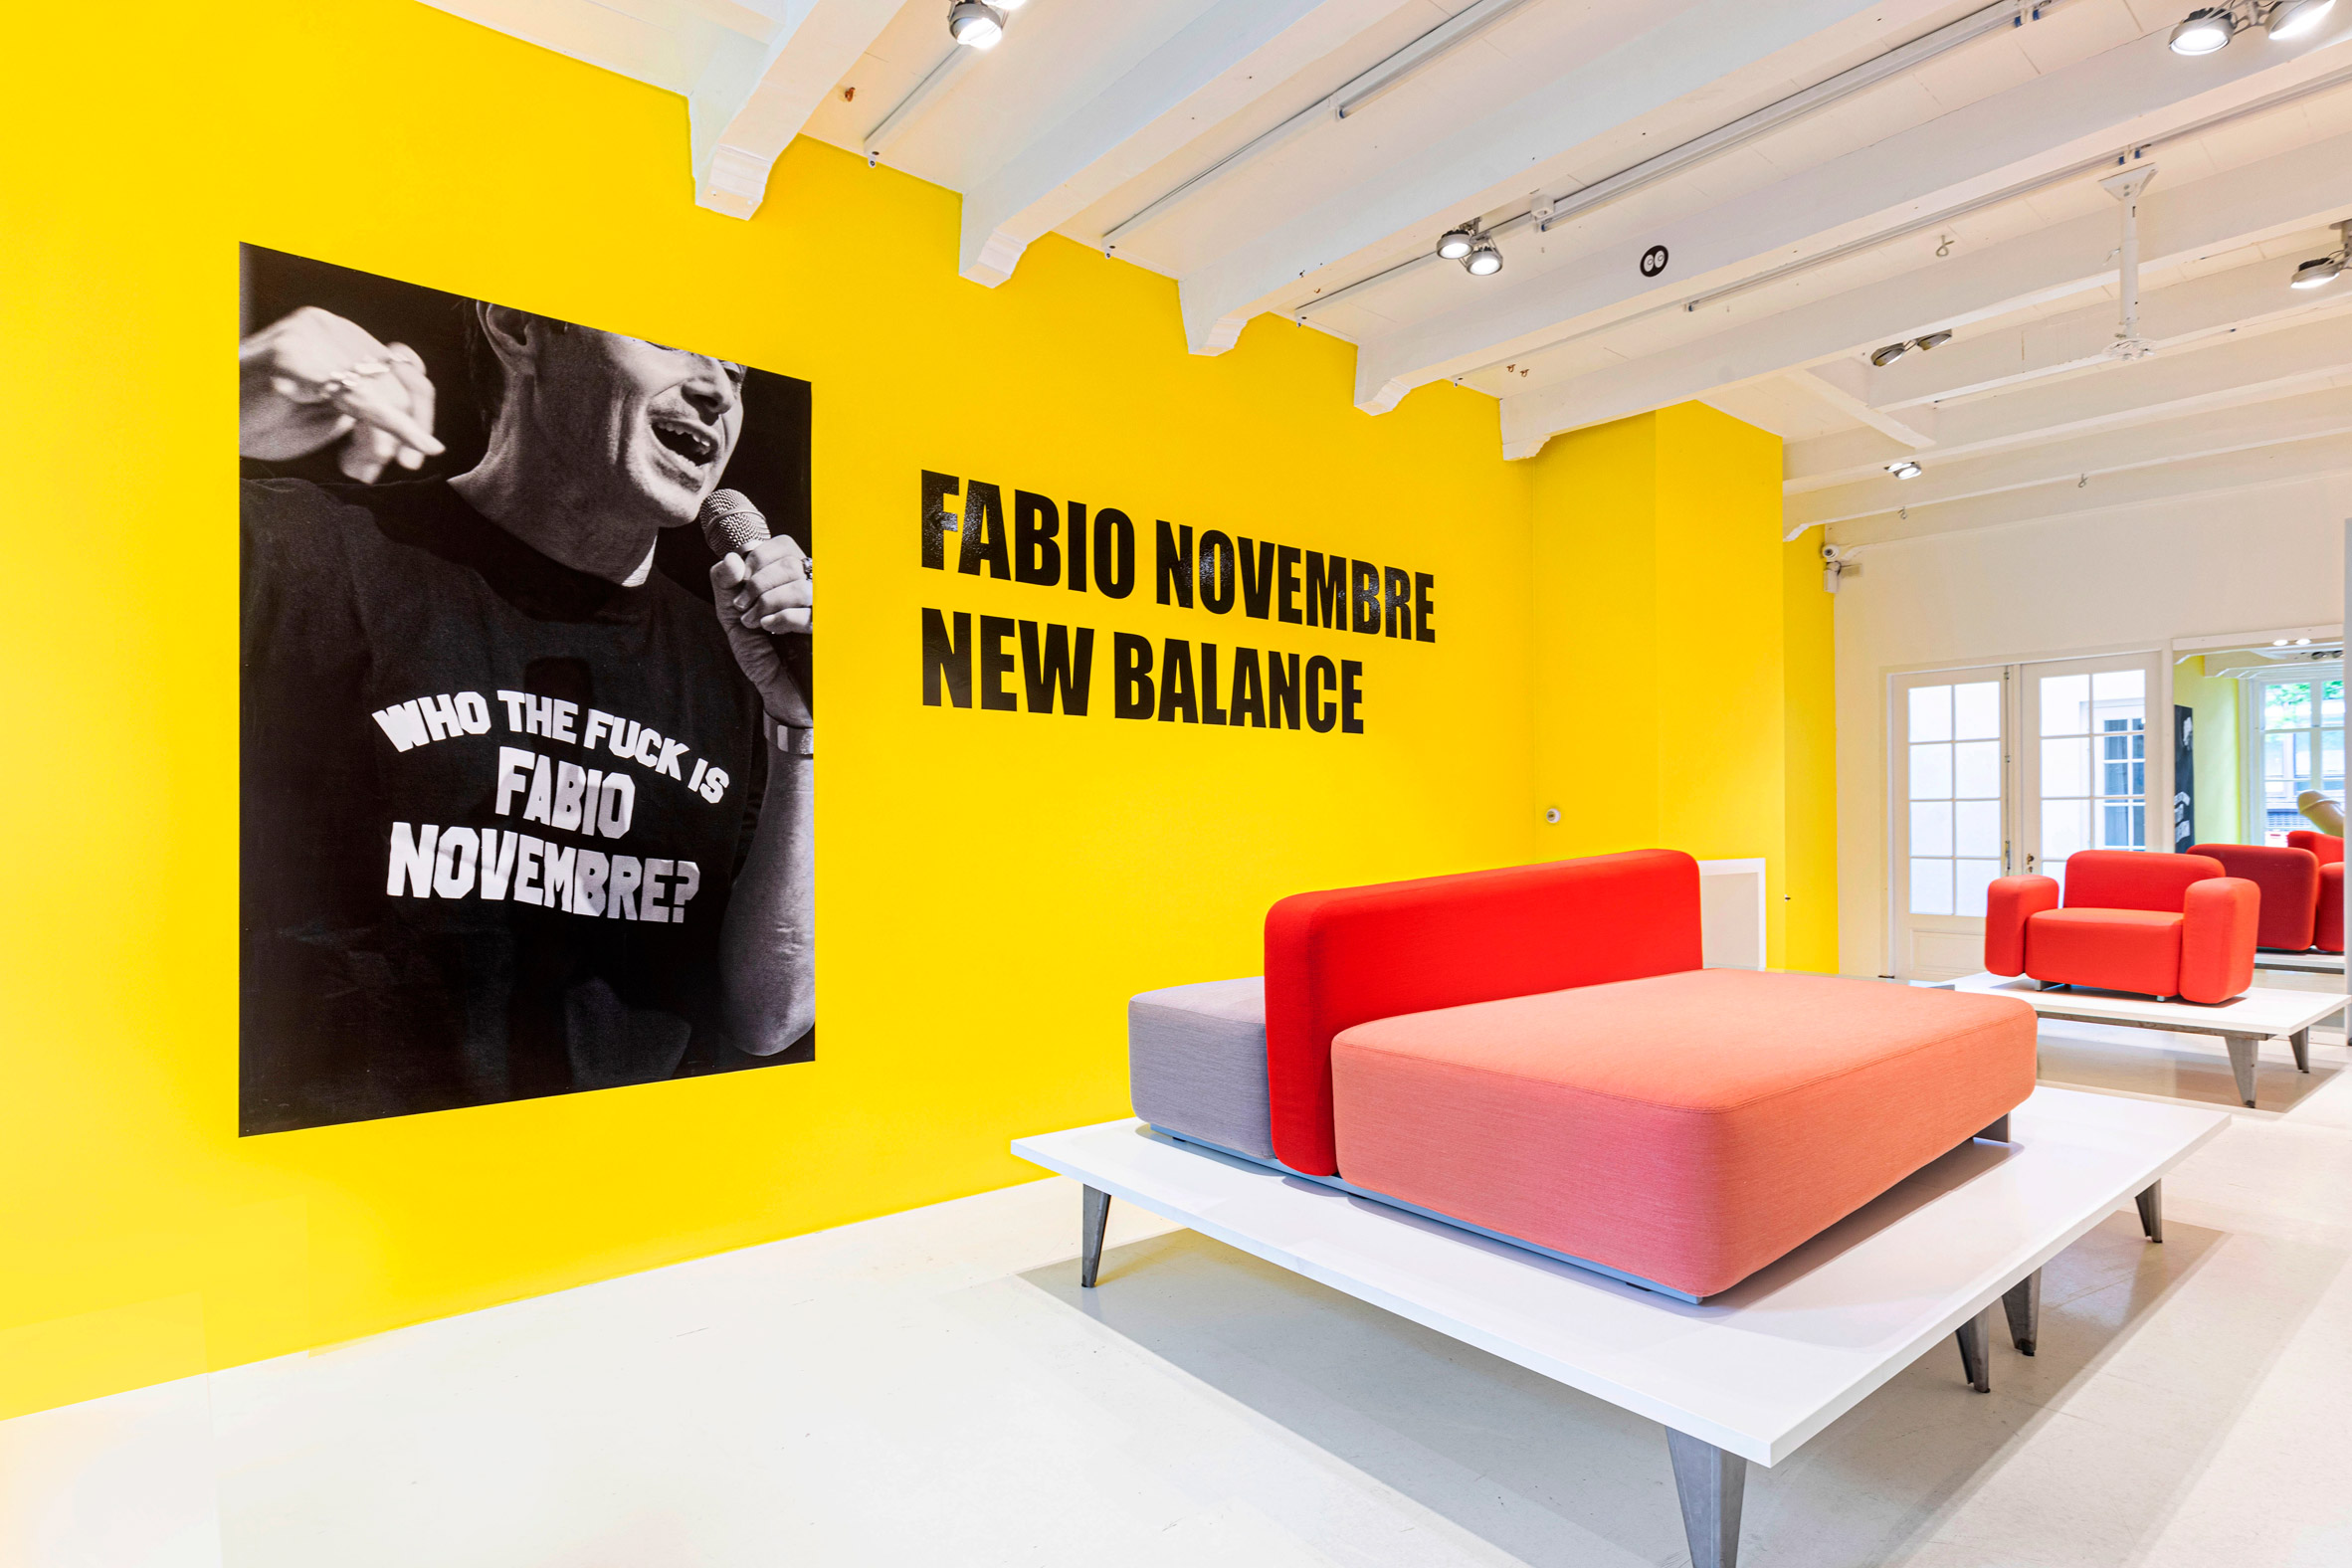 The New Balance sofa by Fabio Novembre